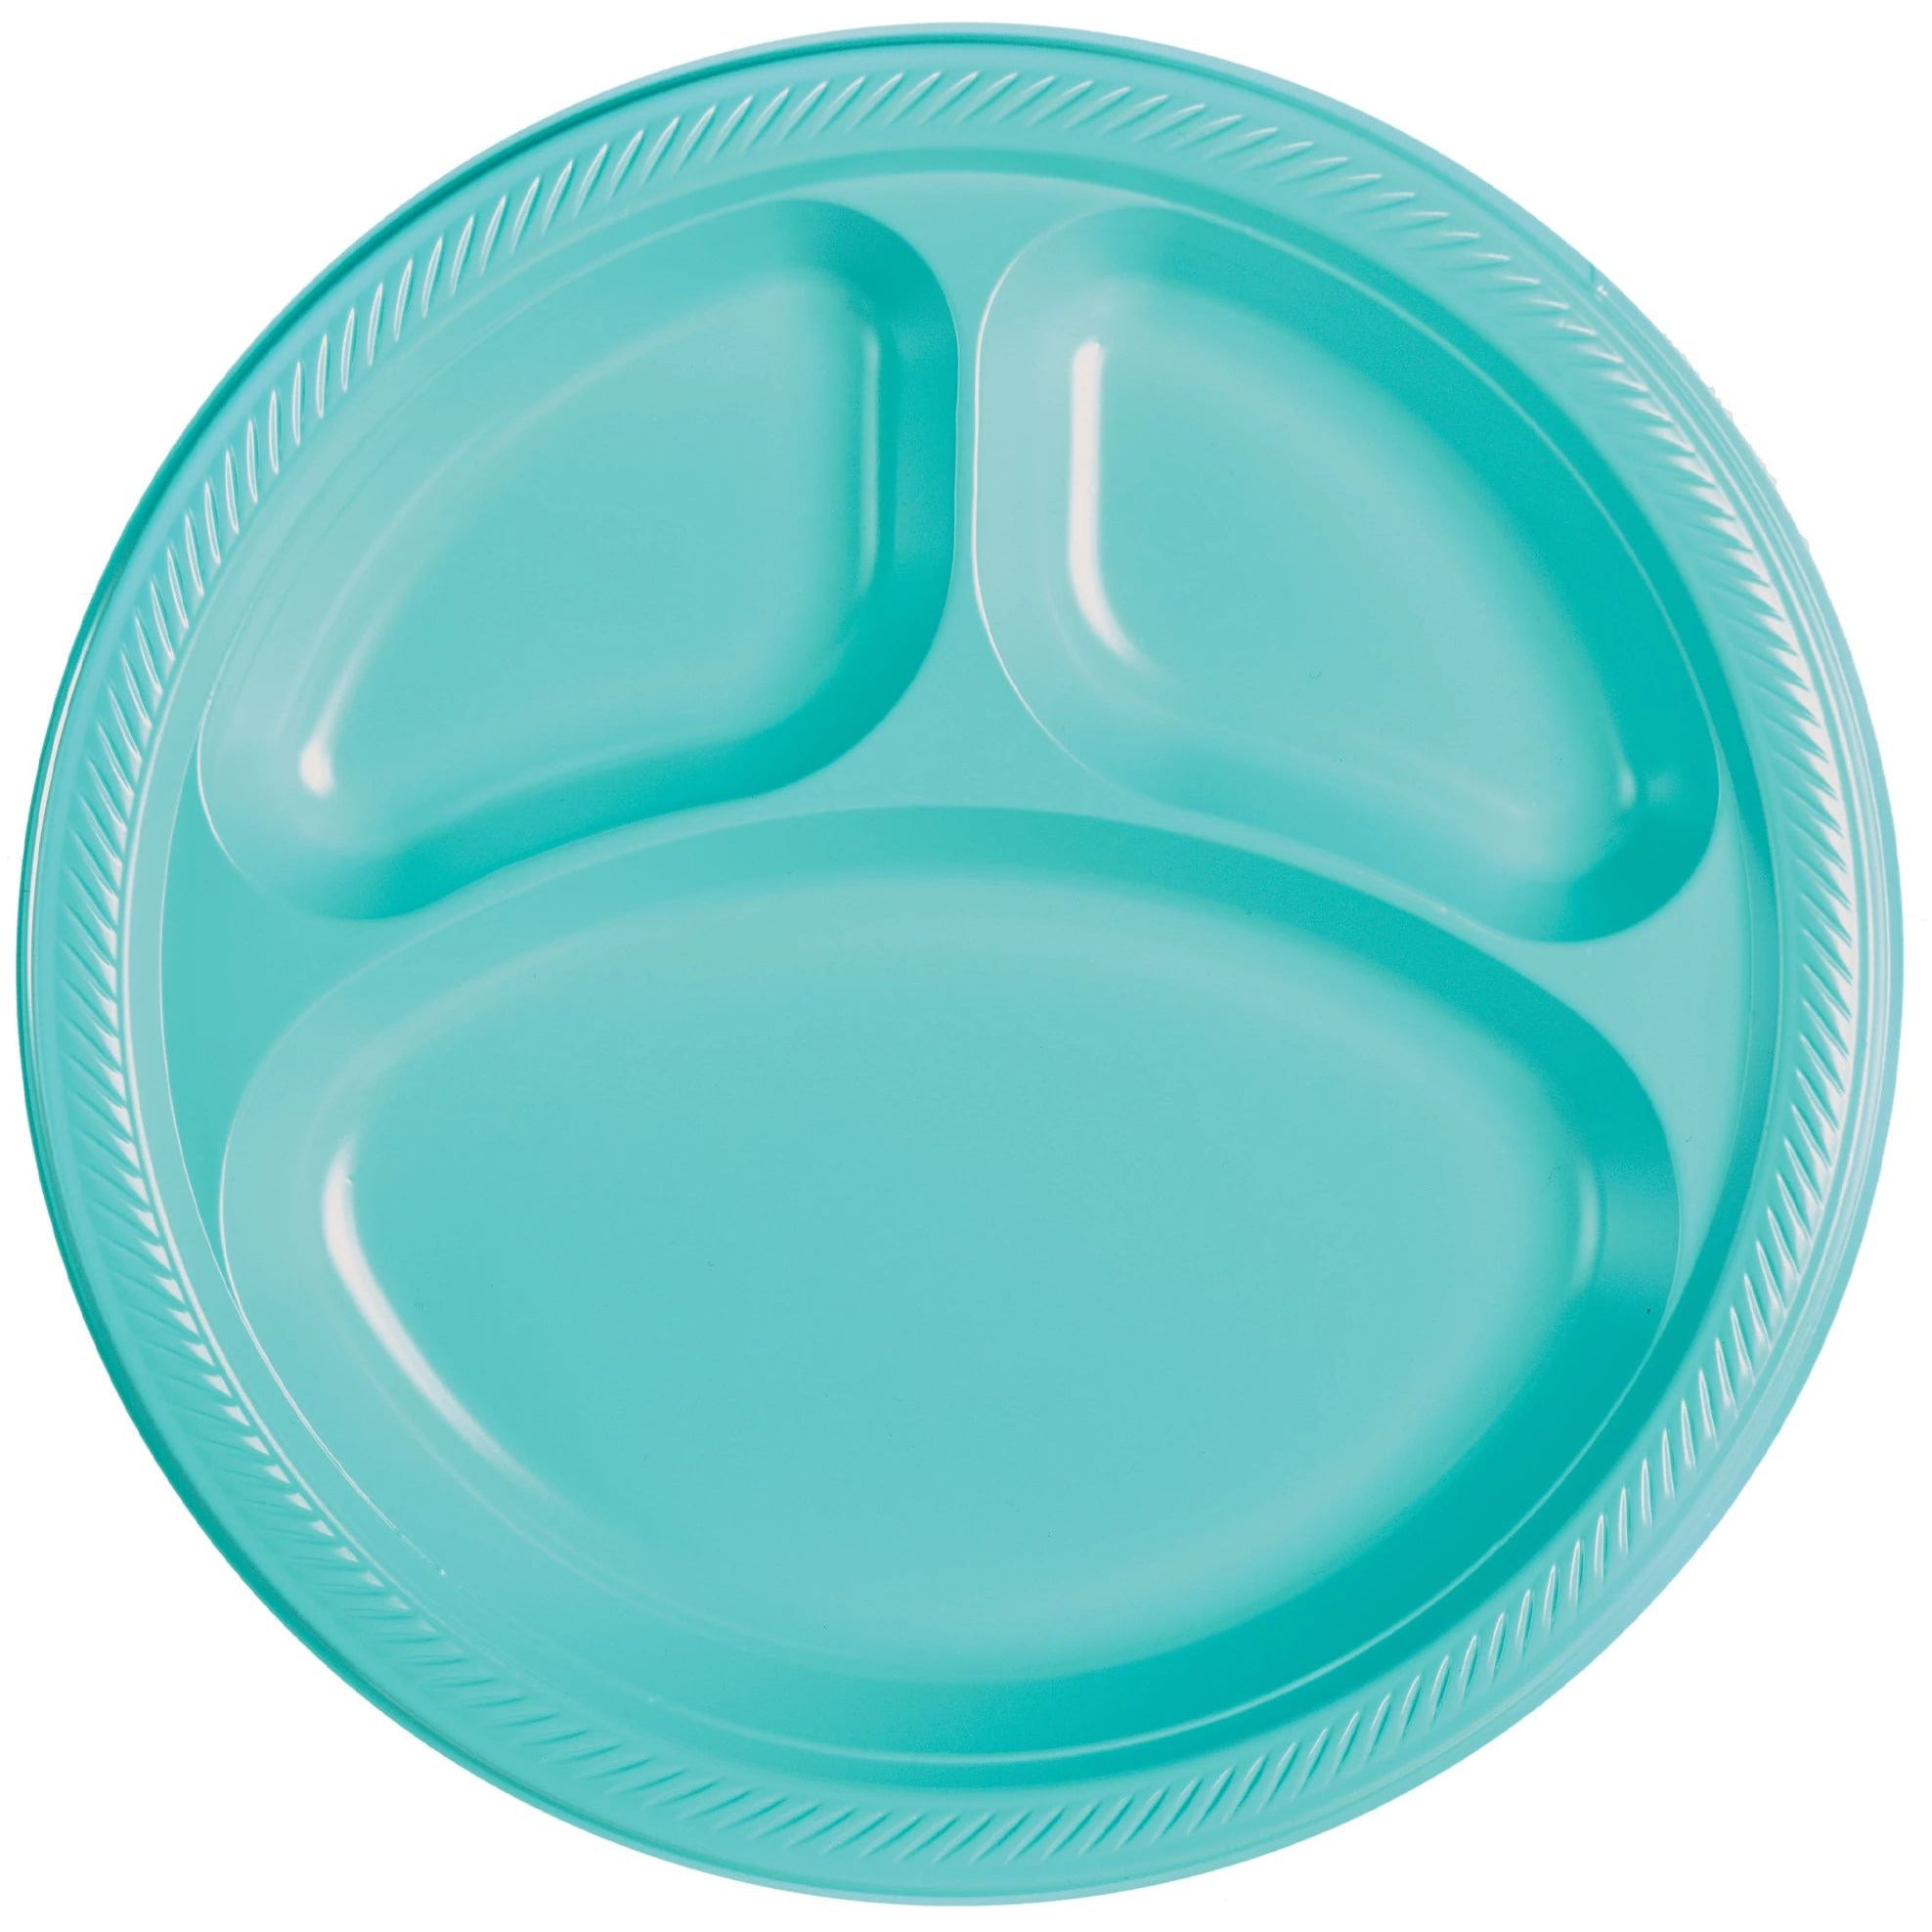 Amscan BASIC Robin's Egg Blue Compartment Plastic Plates